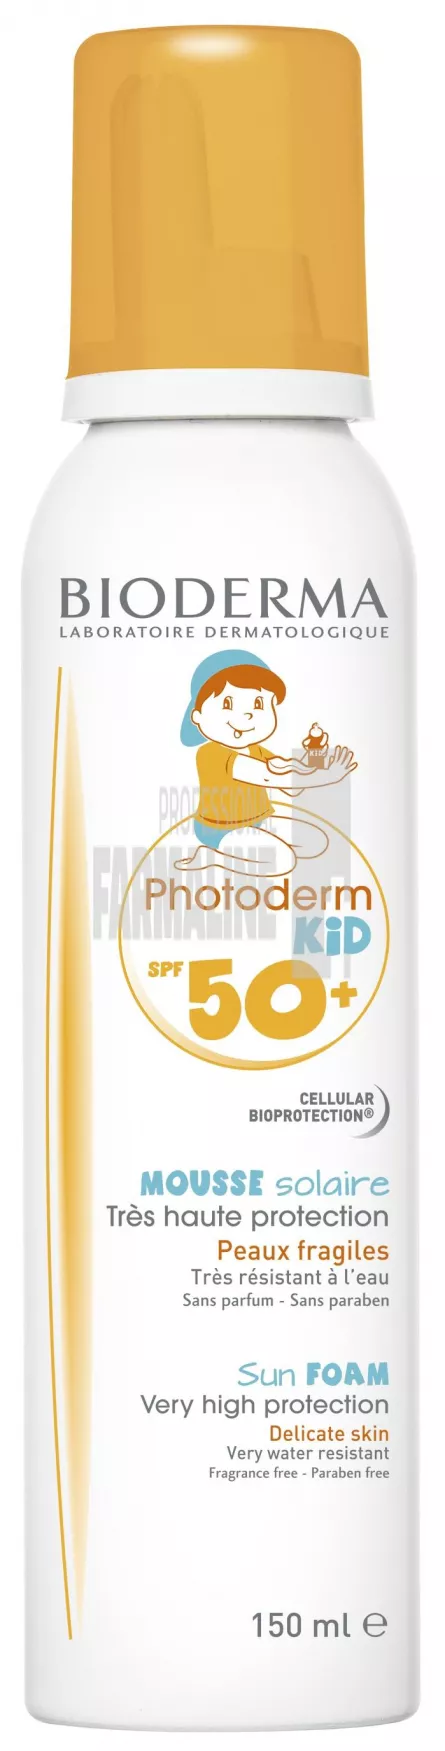 Bioderma Photoderm KID Spuma SPF50 150 ml